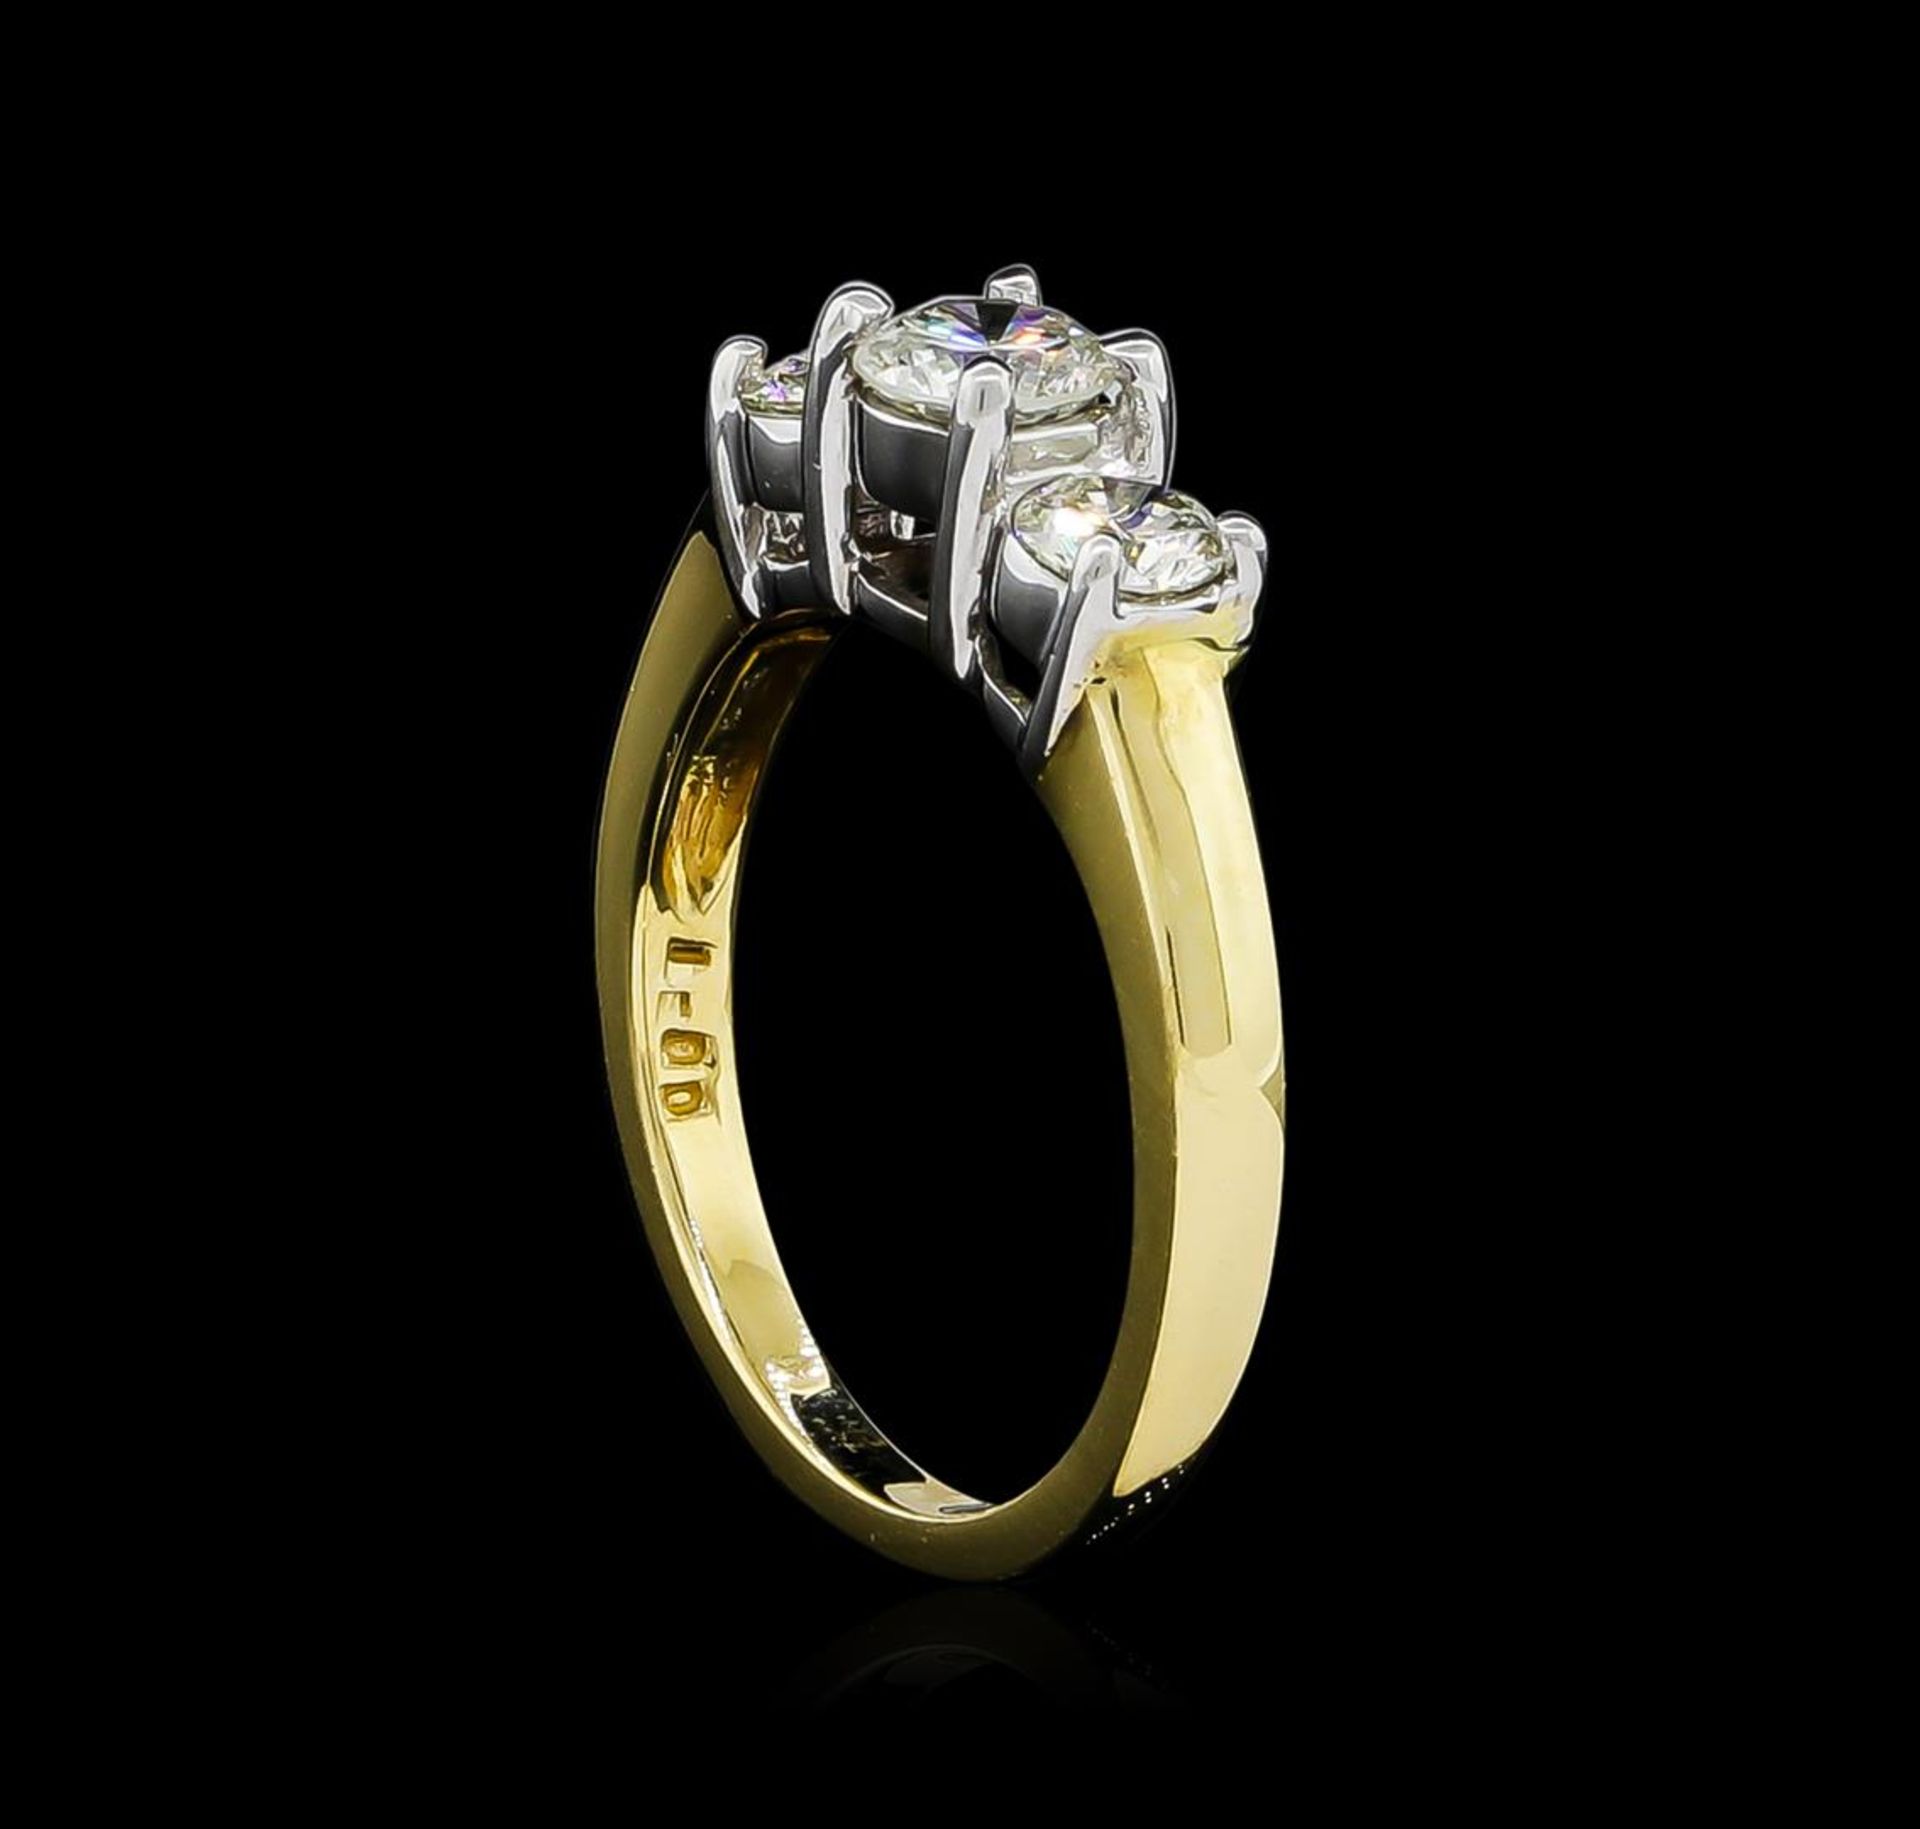 1.00 ctw Diamond Ring - 14KT Yellow Gold - Image 4 of 5